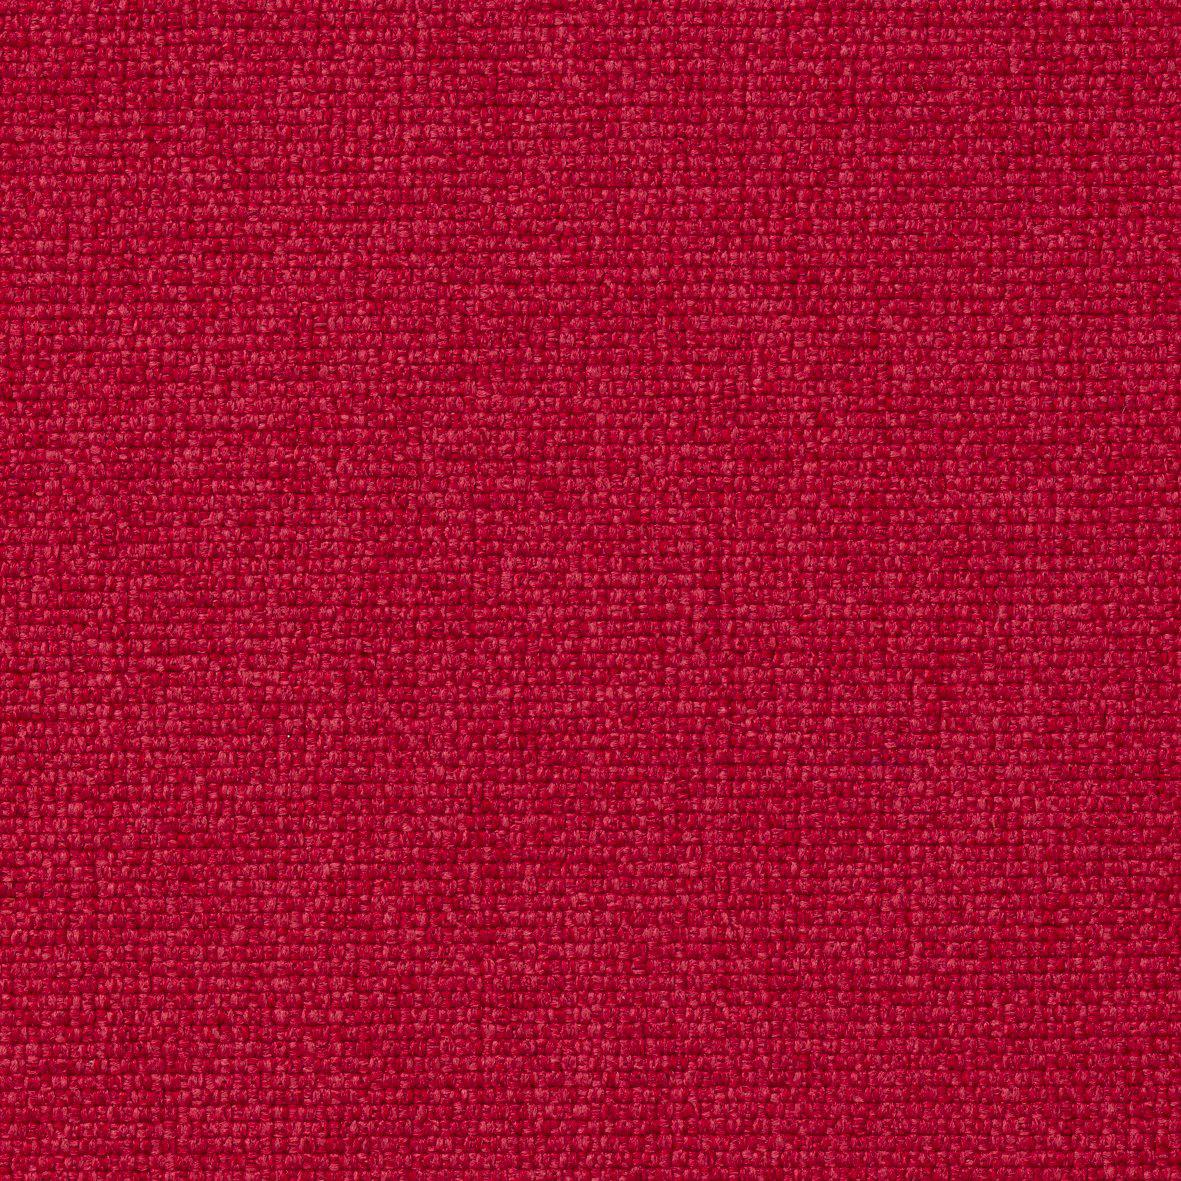 Classic Mid-century Design Armchair in Rasberry Red Fabric-Distinct Designs (London) Ltd